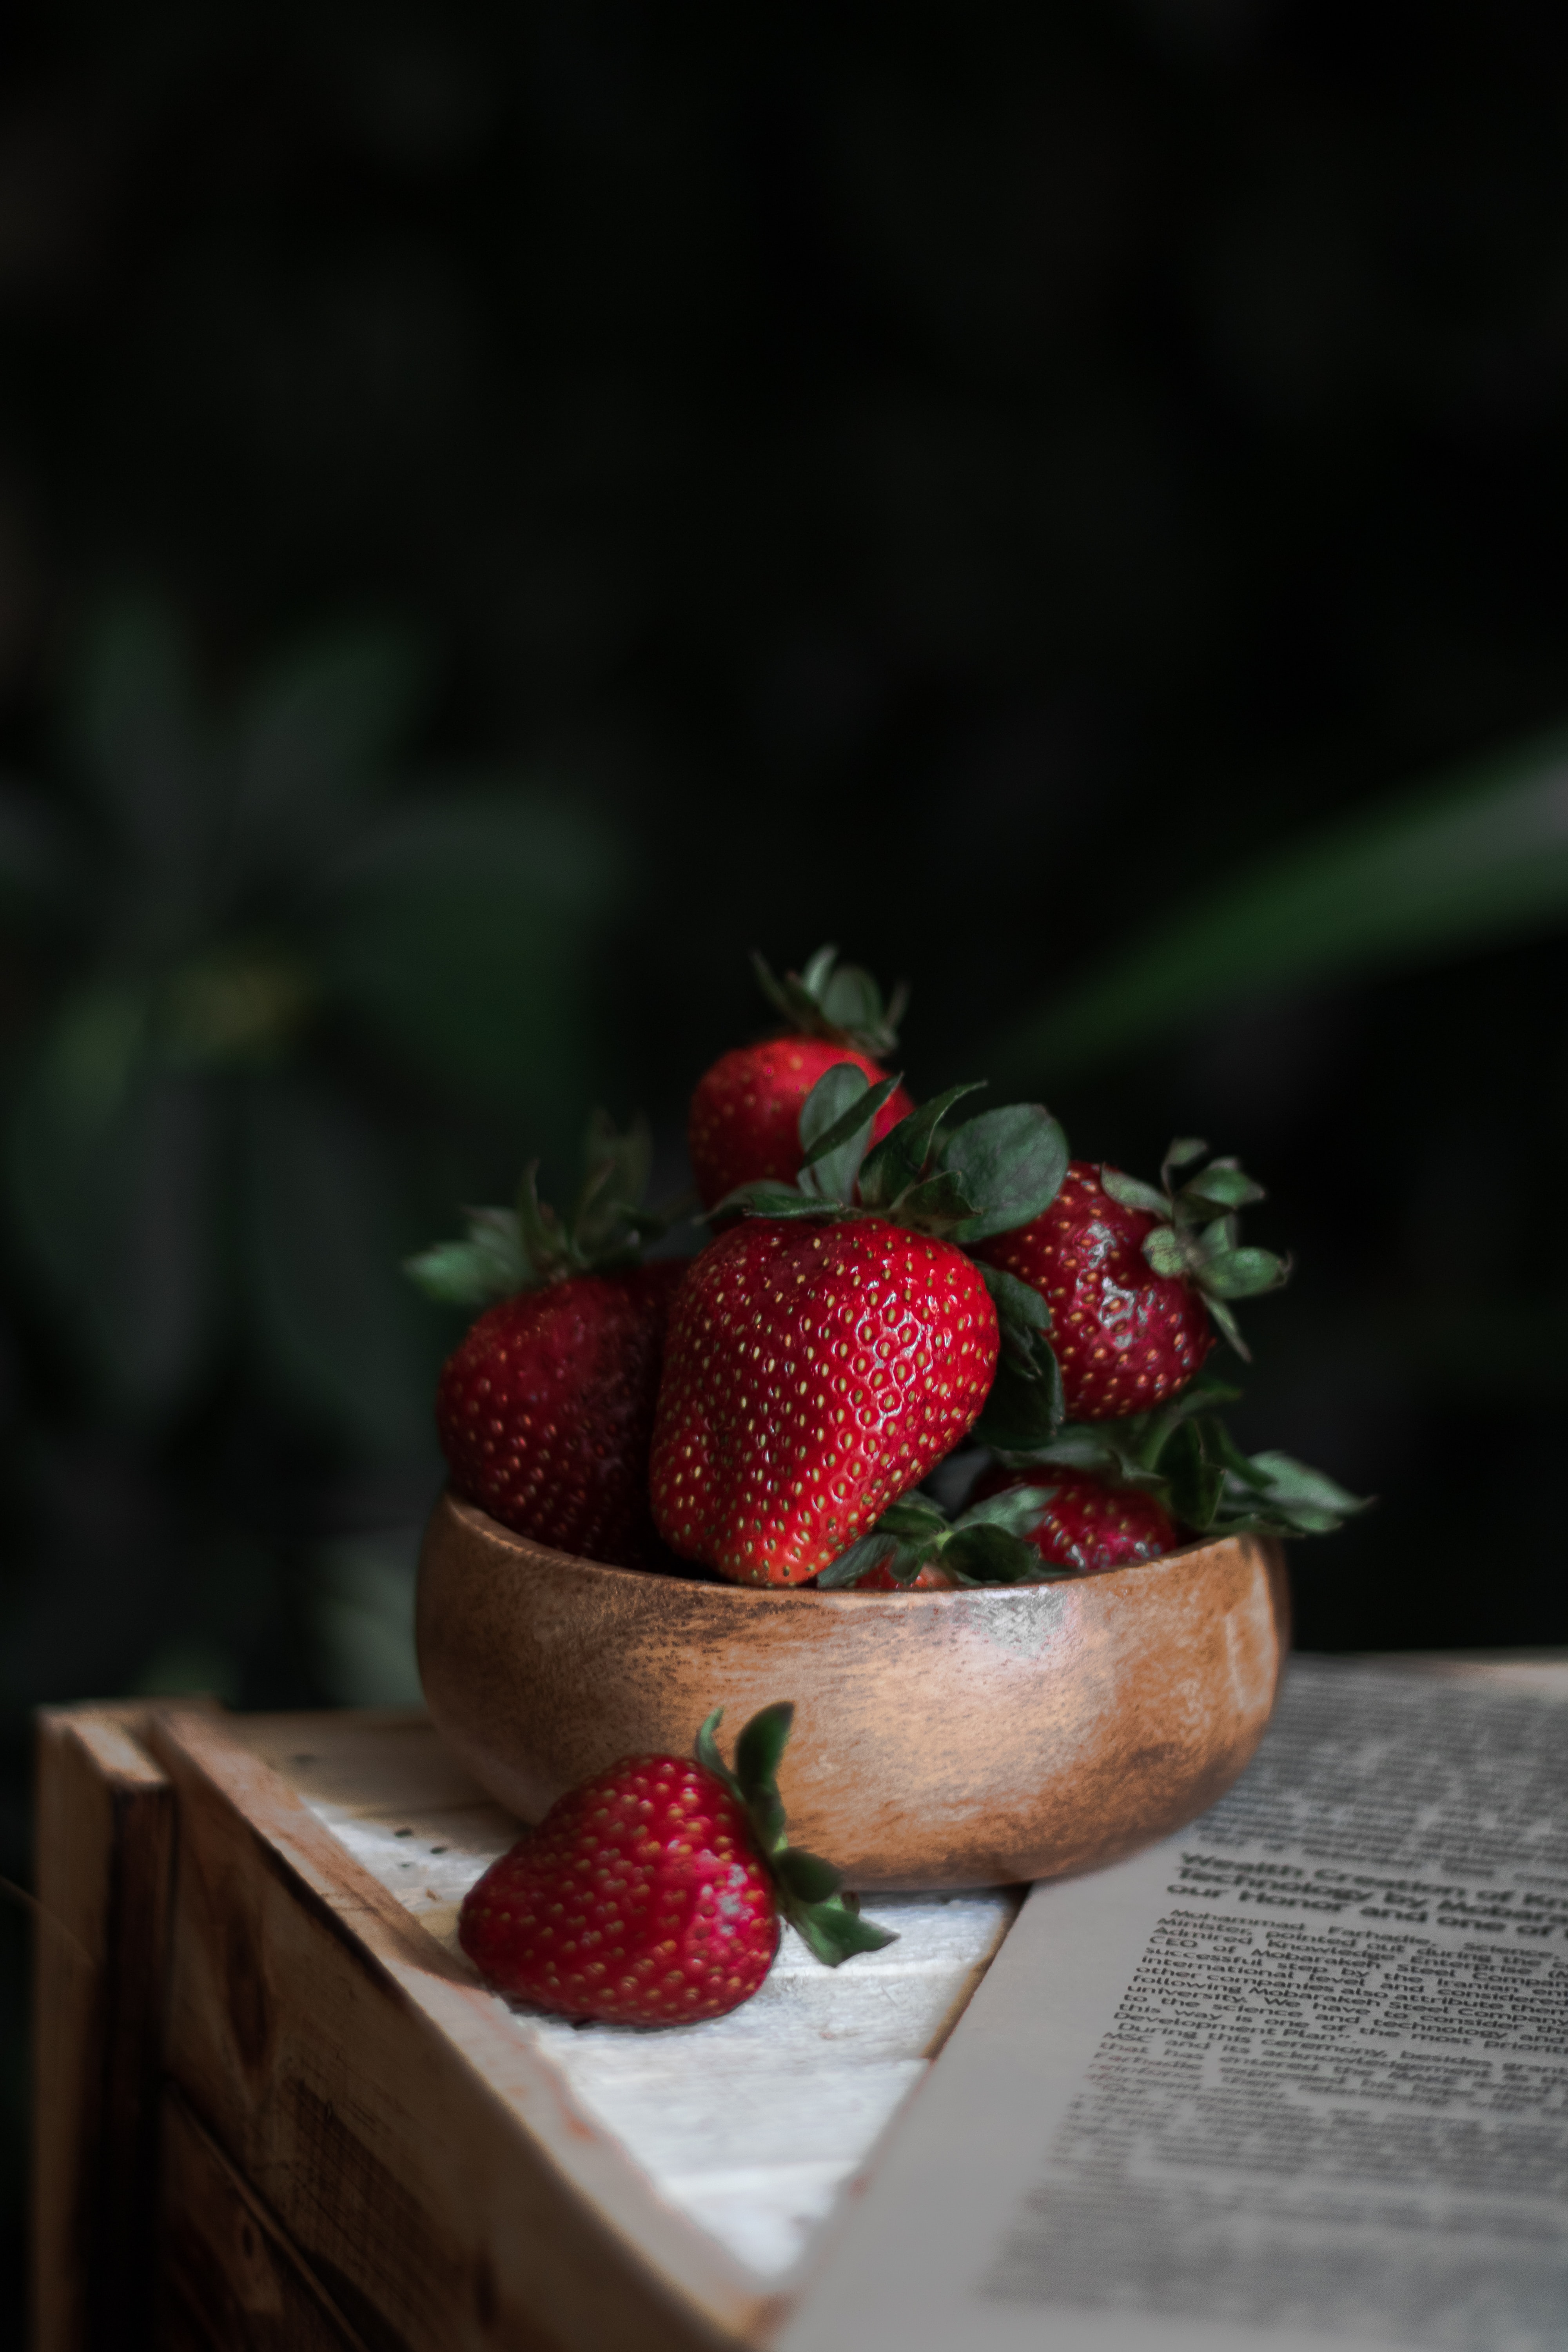 4k Strawberry Photos